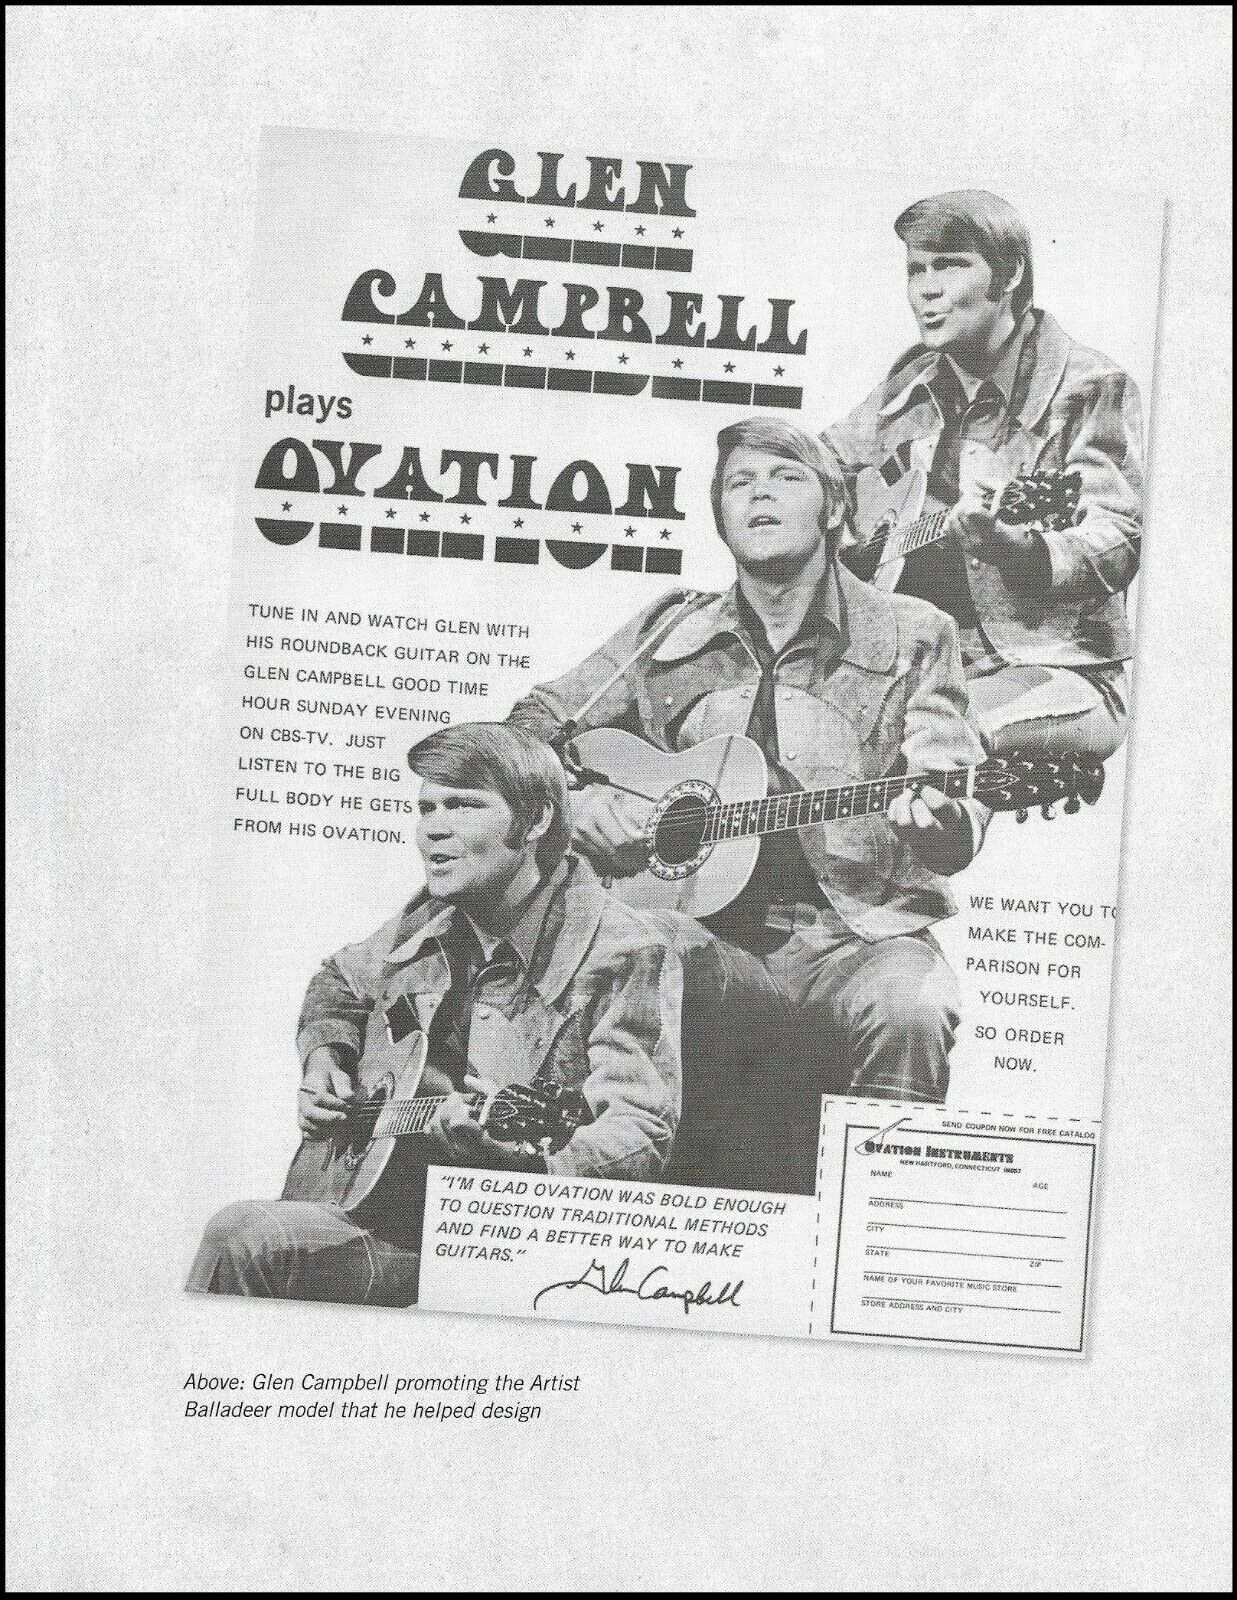 Vintage Ovation guitar ad featuring Glen Campbell promoting the Artist Balladeer